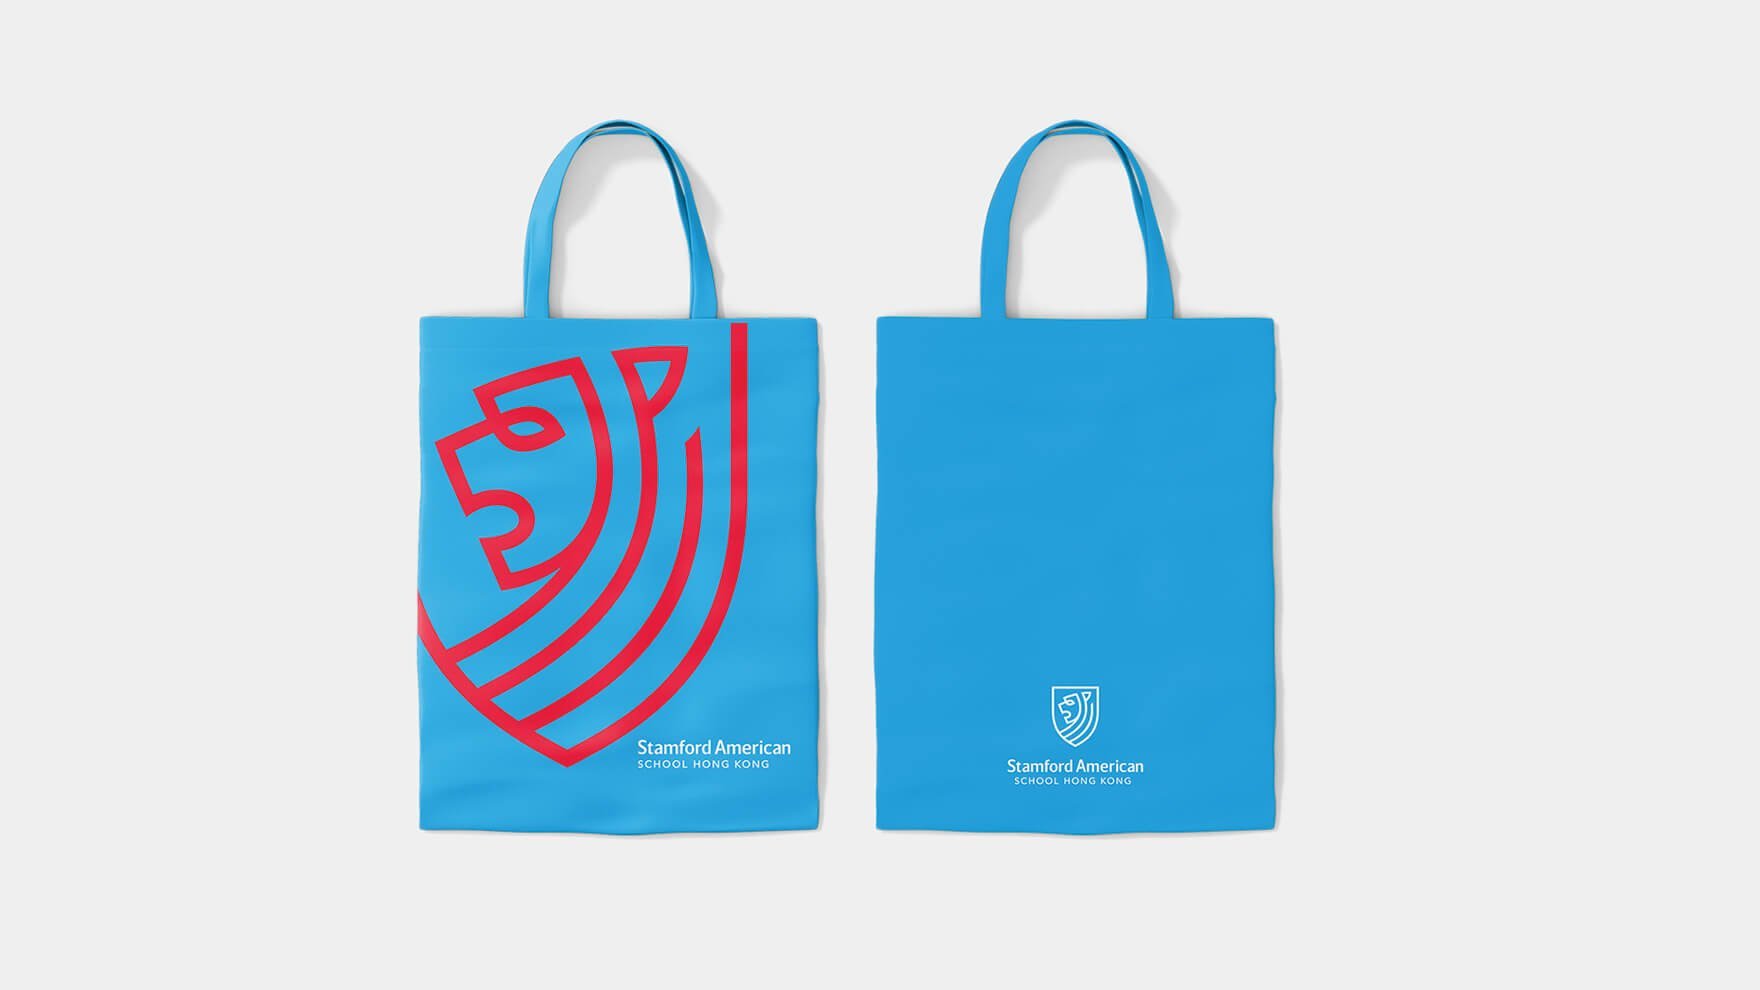 Branding Agency Hong Kong_SAIS_Corporate Identity Design_Bag Design_Cheddar Media_1760